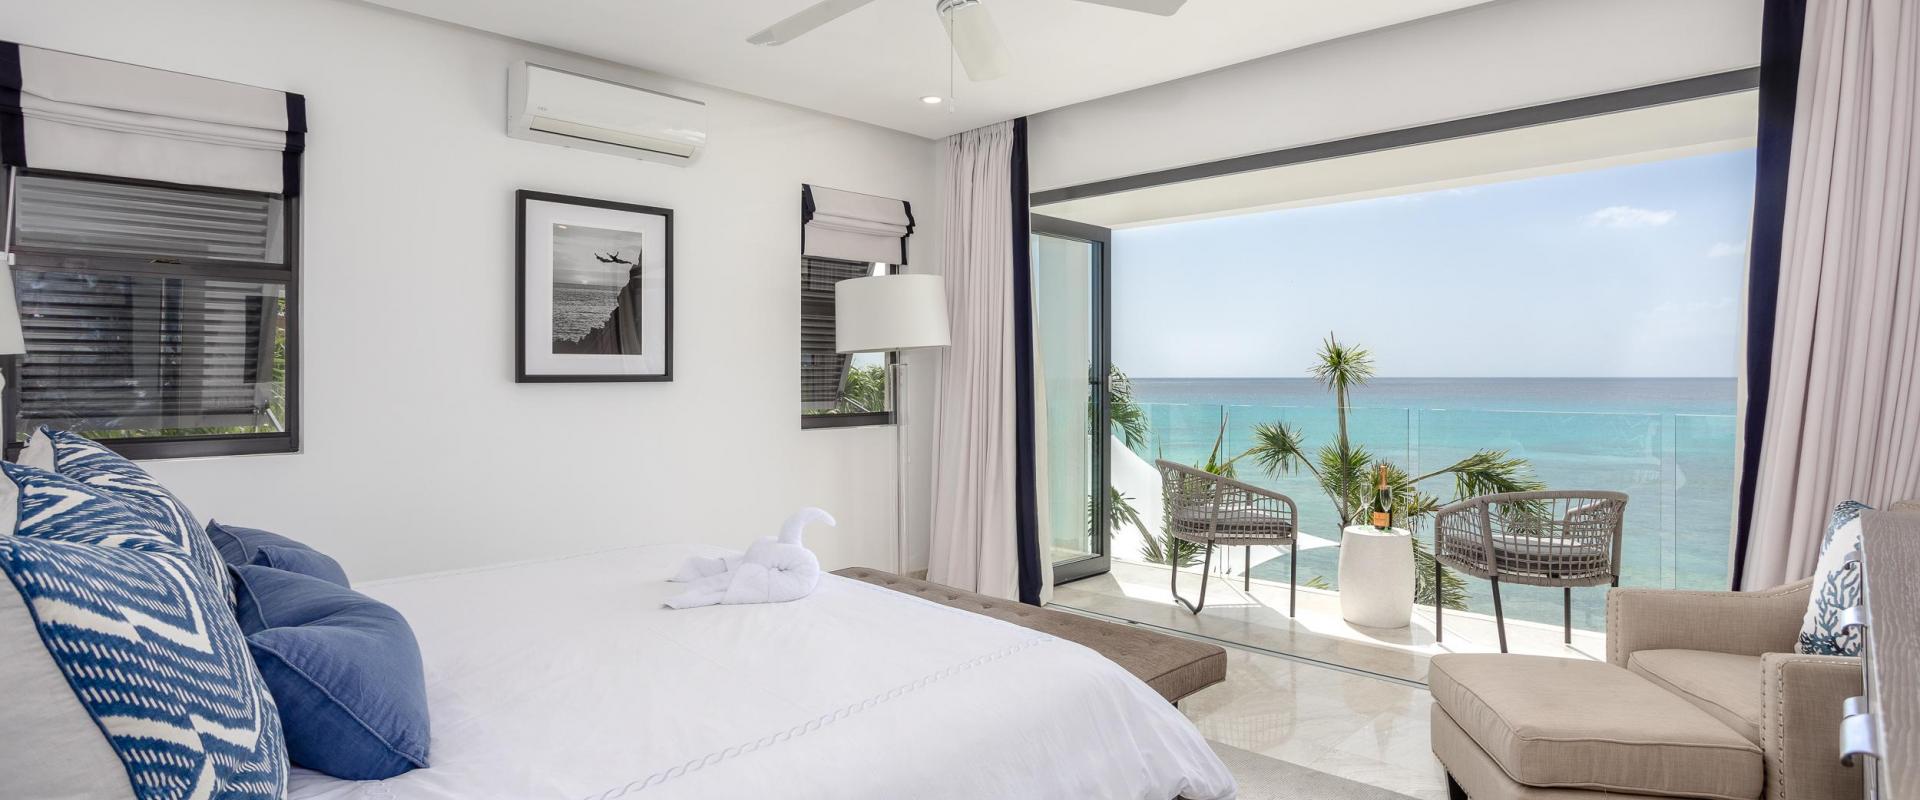 Barbados Vacation Villa Dolphin Beach House Master Bedroom with Ocean View and Patio